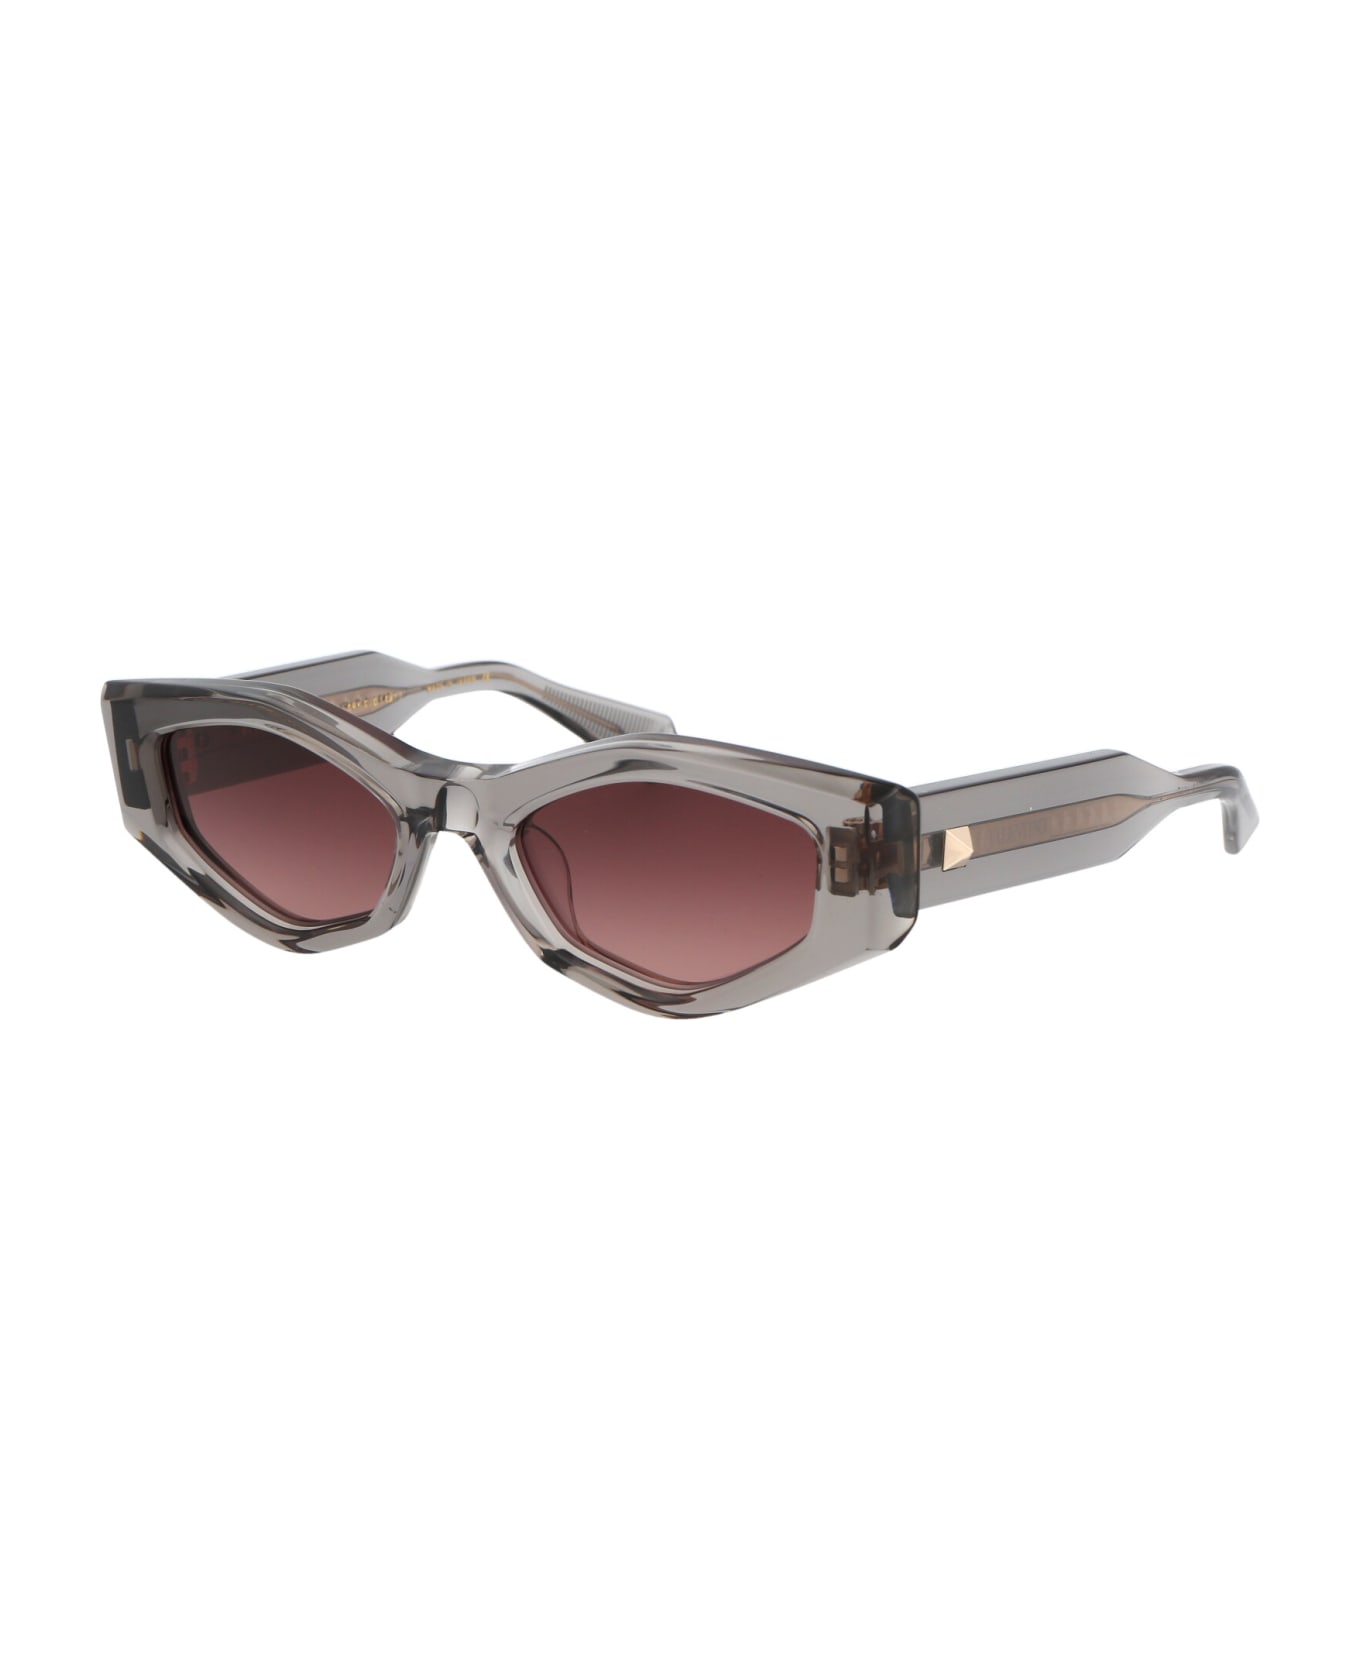 Valentino Eyewear V - Tre Sunglasses - 101Sinner Sunglasses Cord